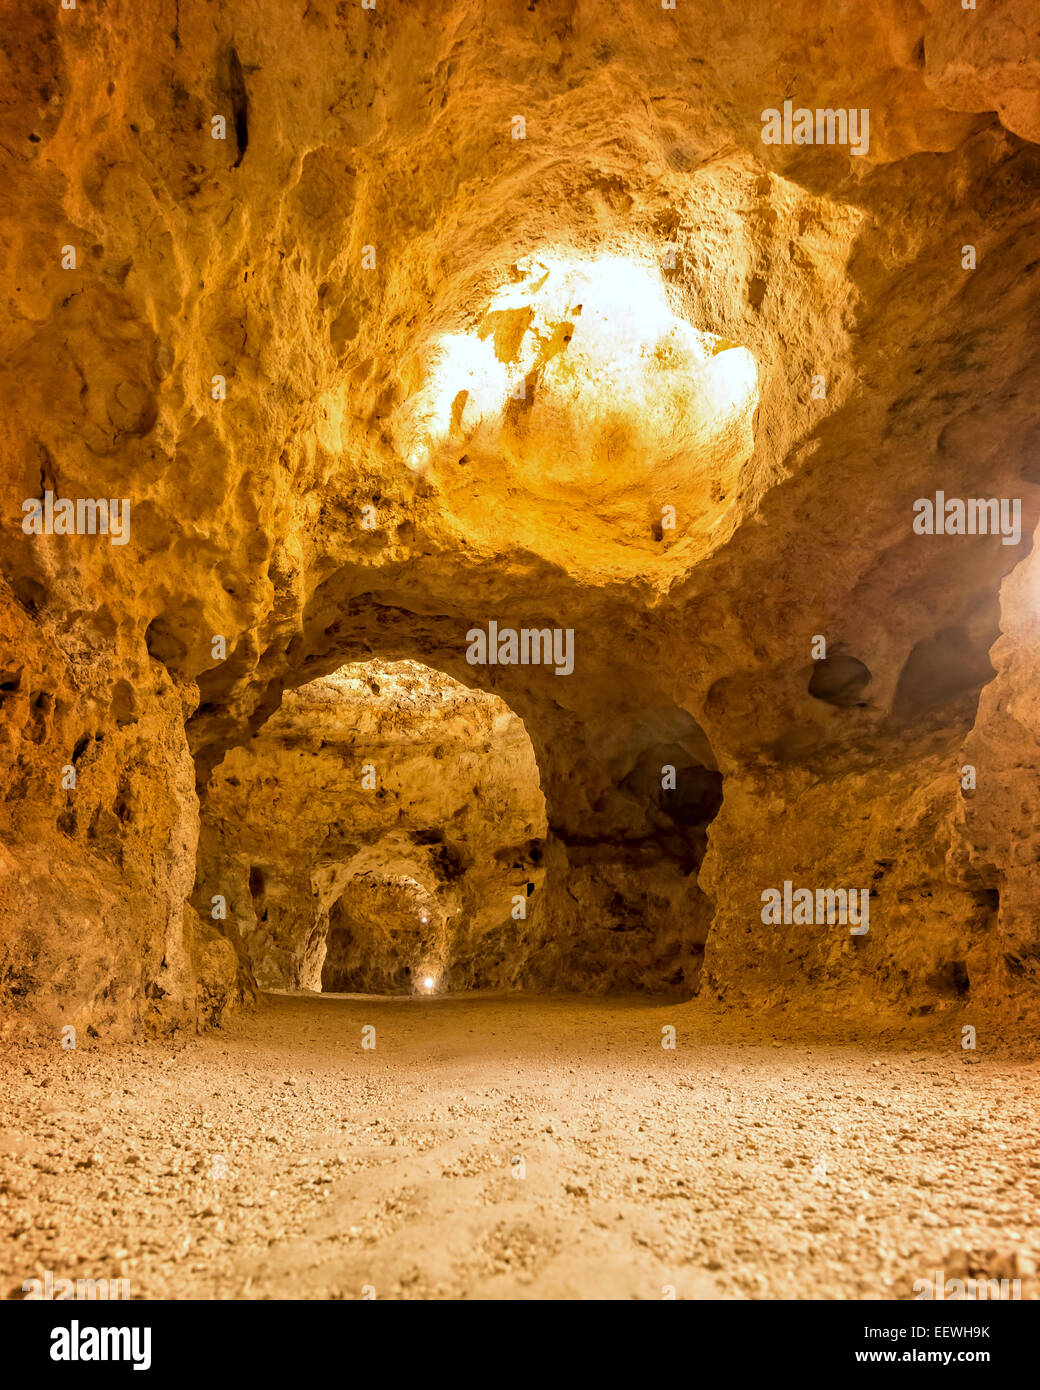 Llighted Höhle von unten fotografiert Stockfoto